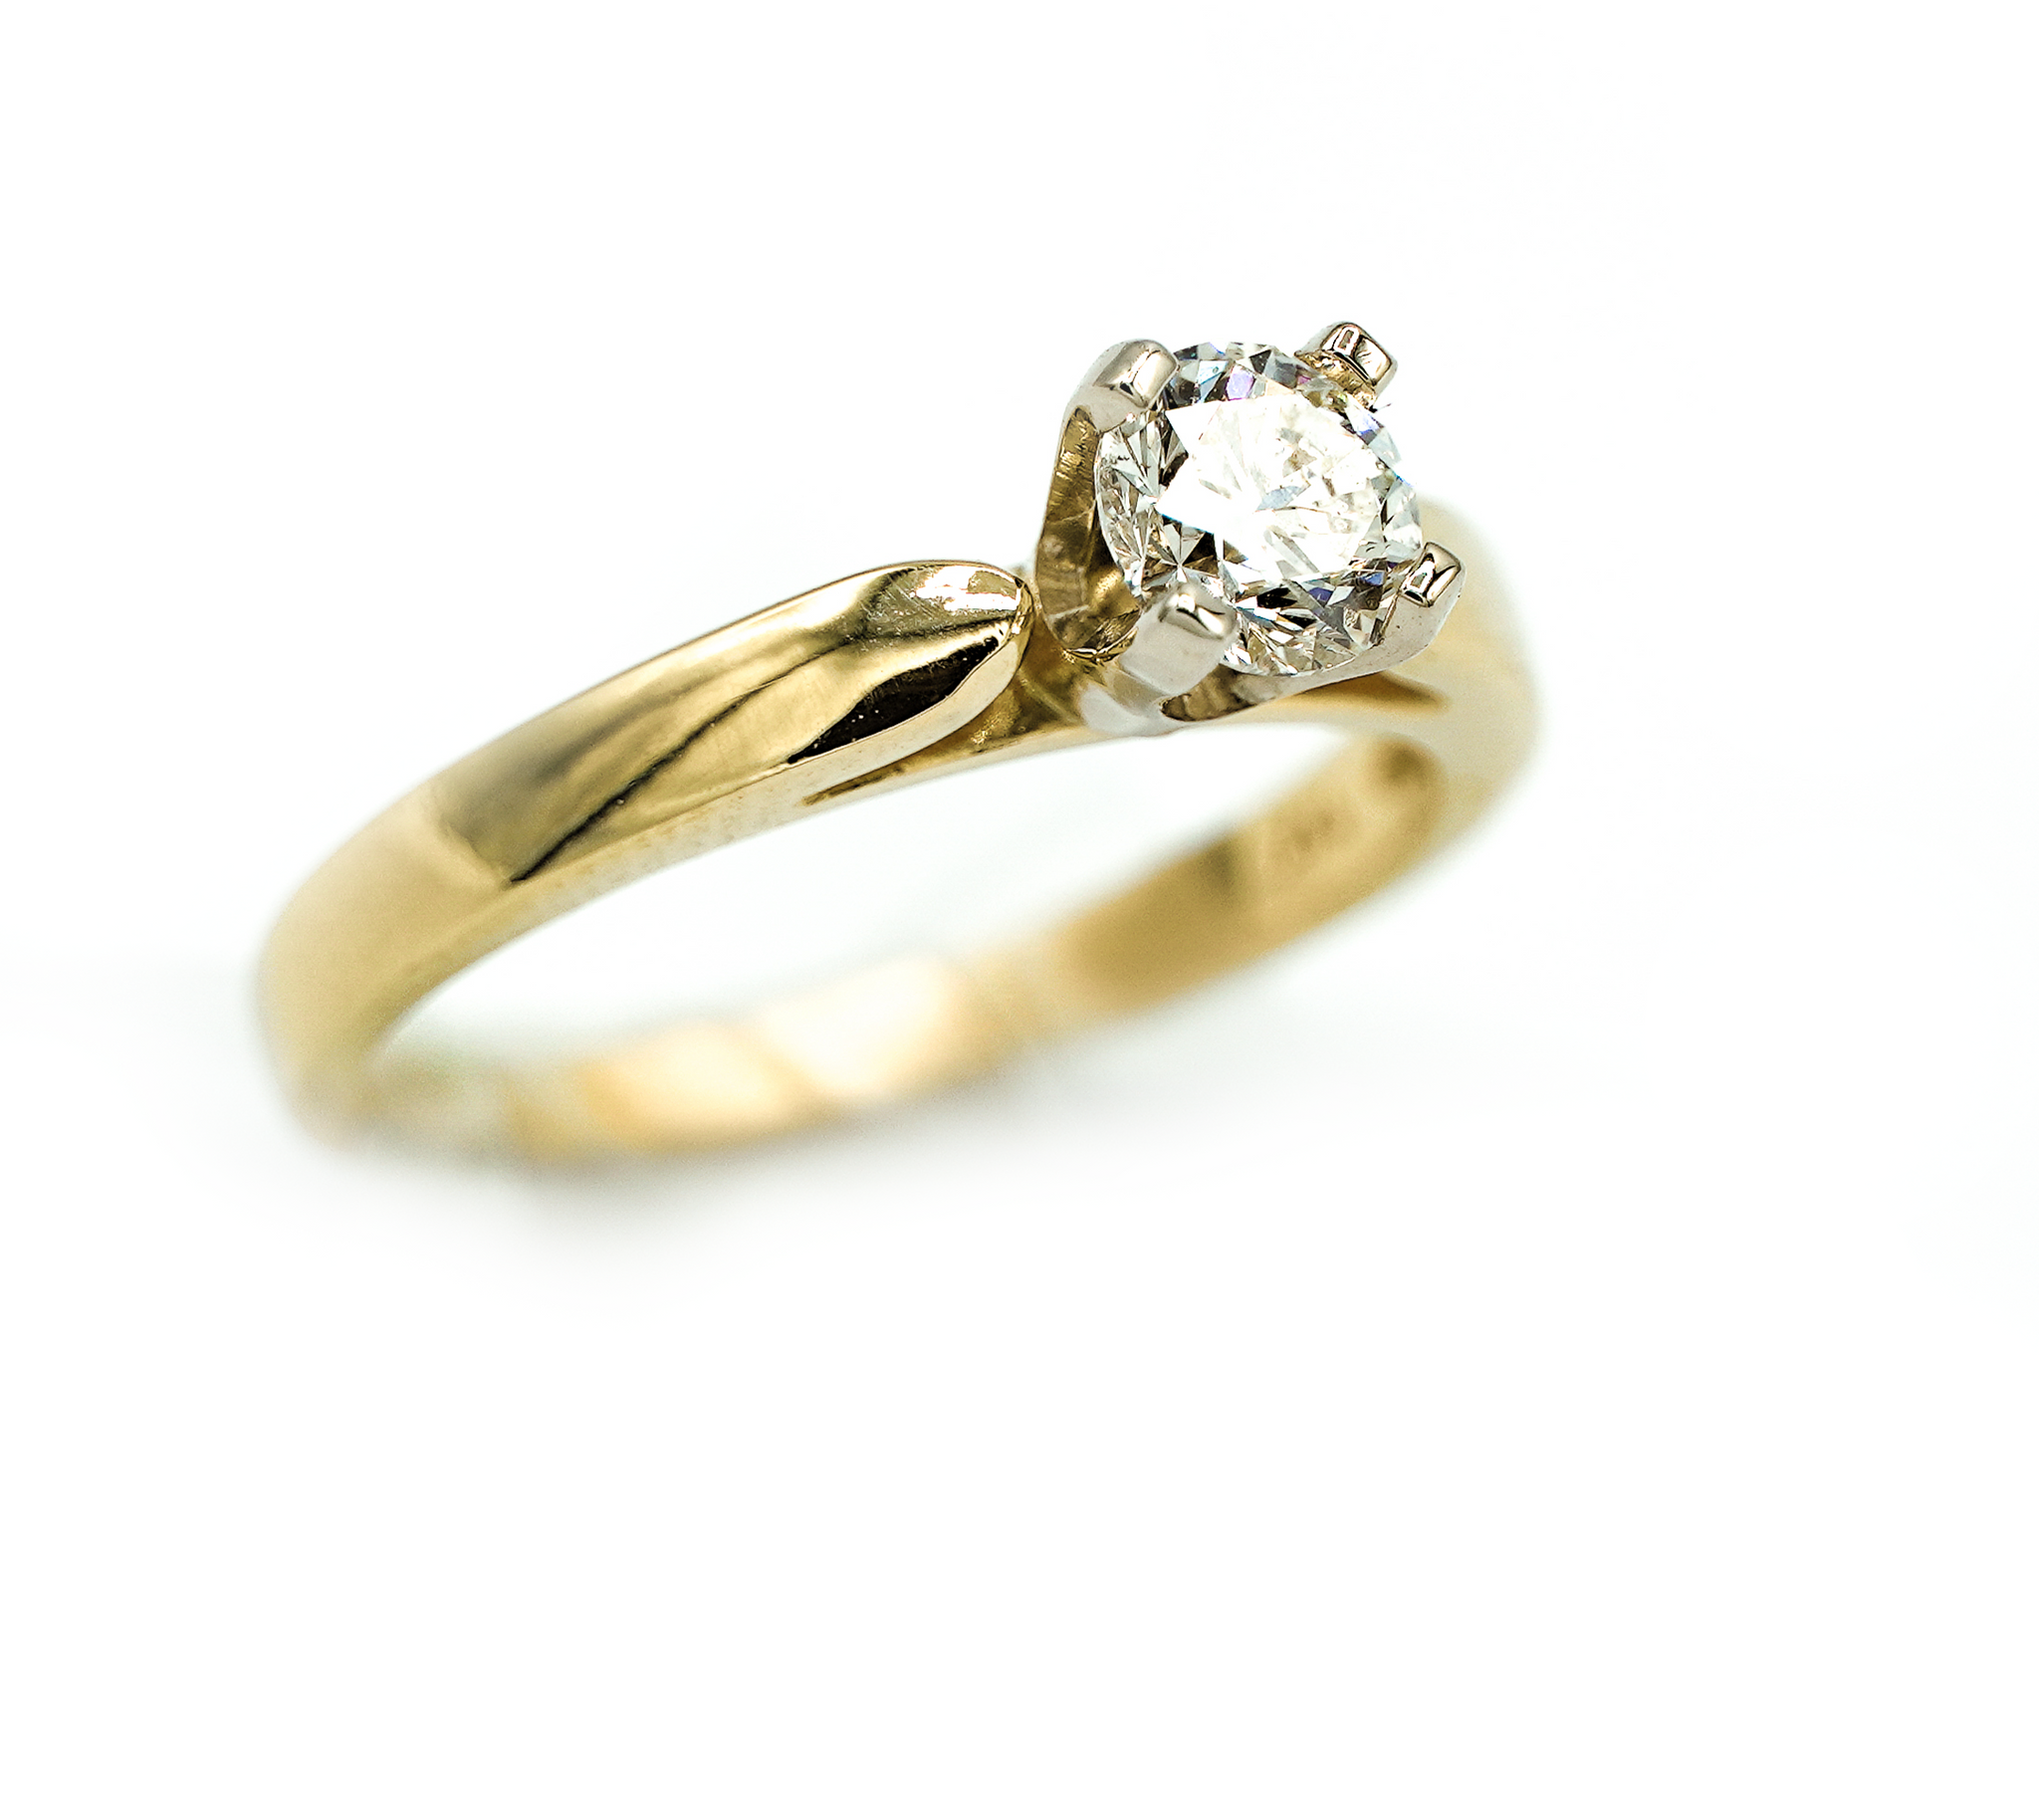 Montalvo Diamonds - Round Brilliant Solitaire Diamond Ring in 14k Yellow Gold